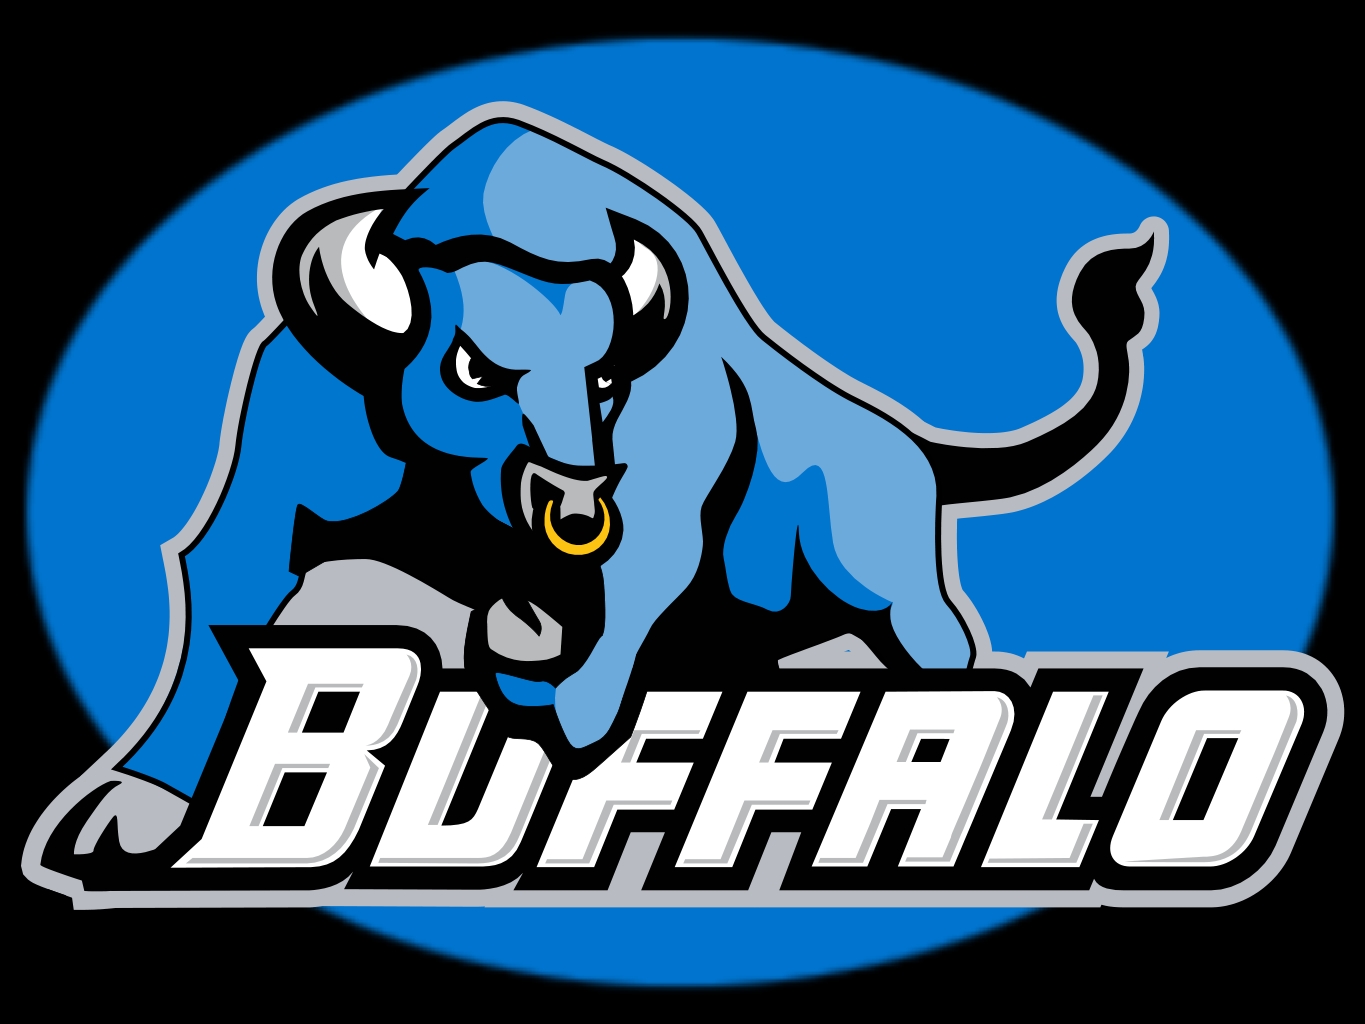 Buffalo Bulls Tickets